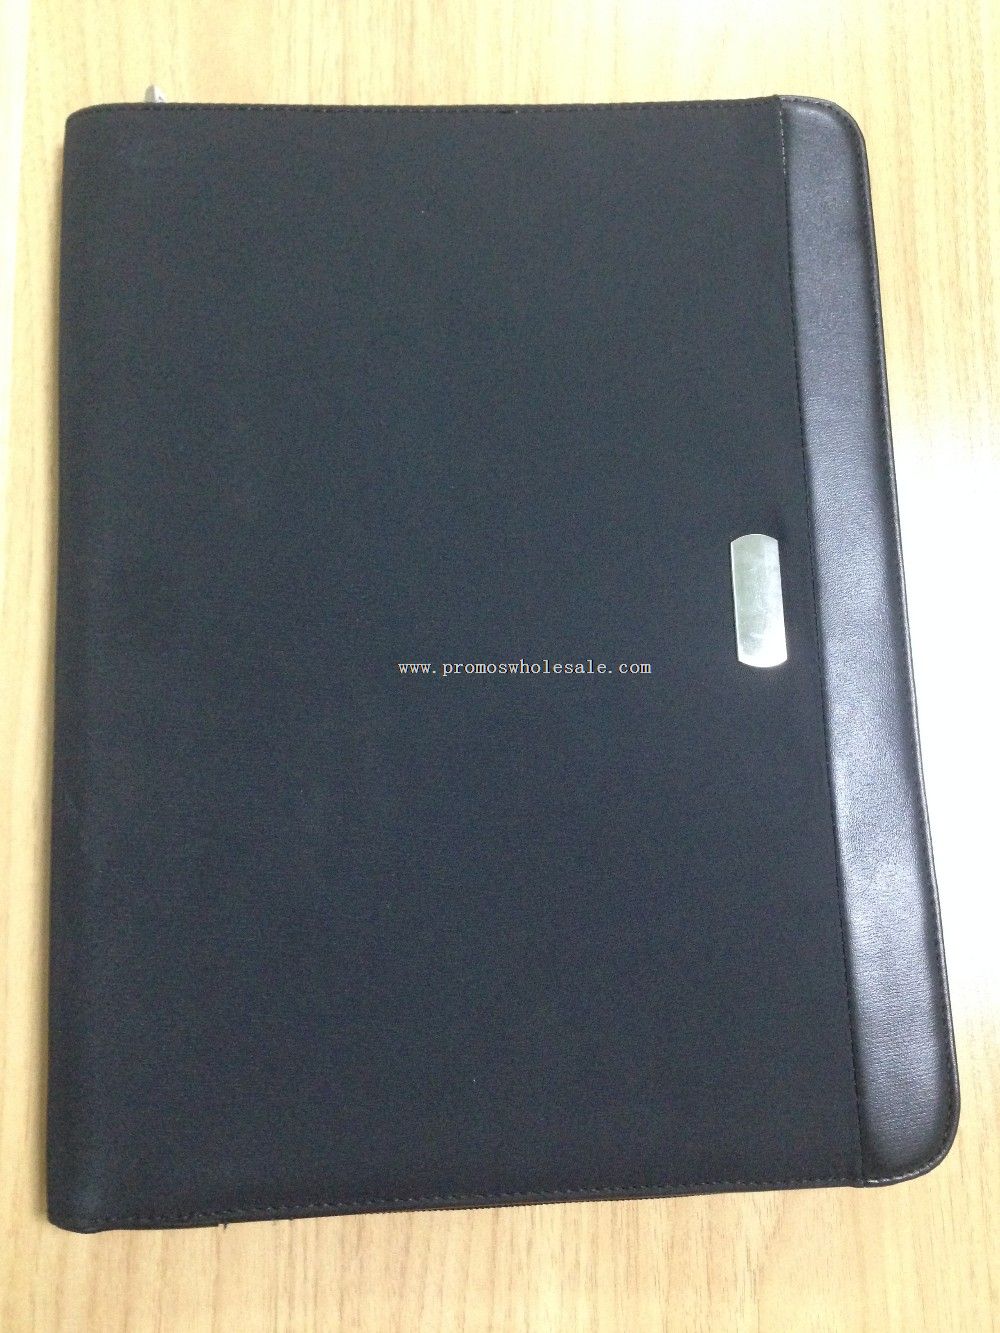 PU kulit A4 Folder dengan Kalkulator